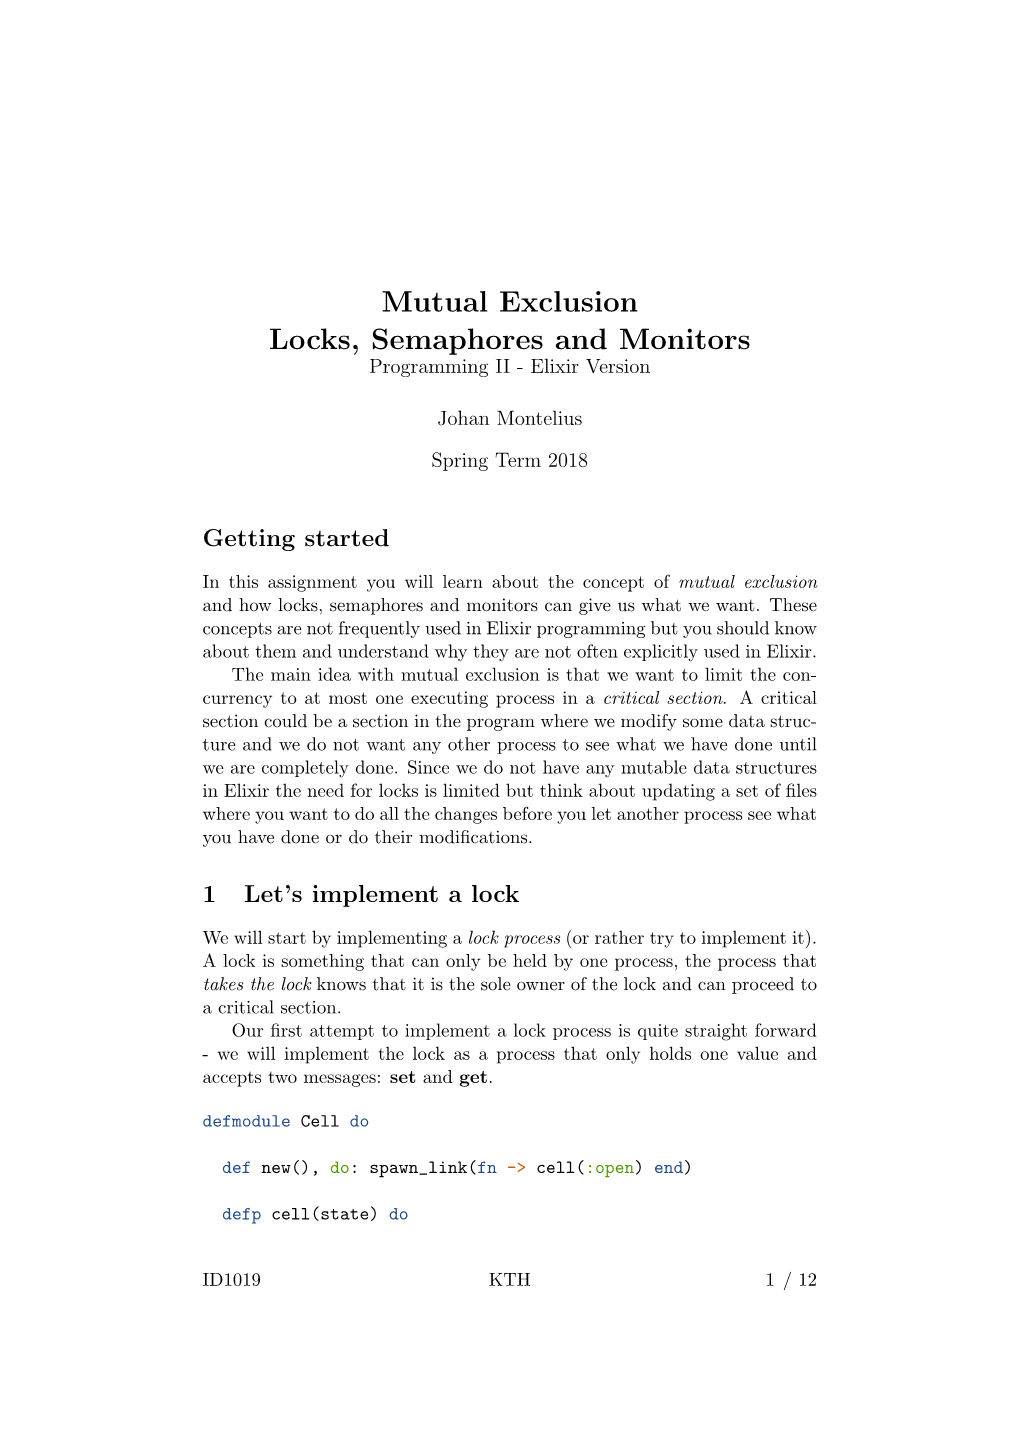 Mutual Exclusion Locks, Semaphores and Monitors Programming II - Elixir Version